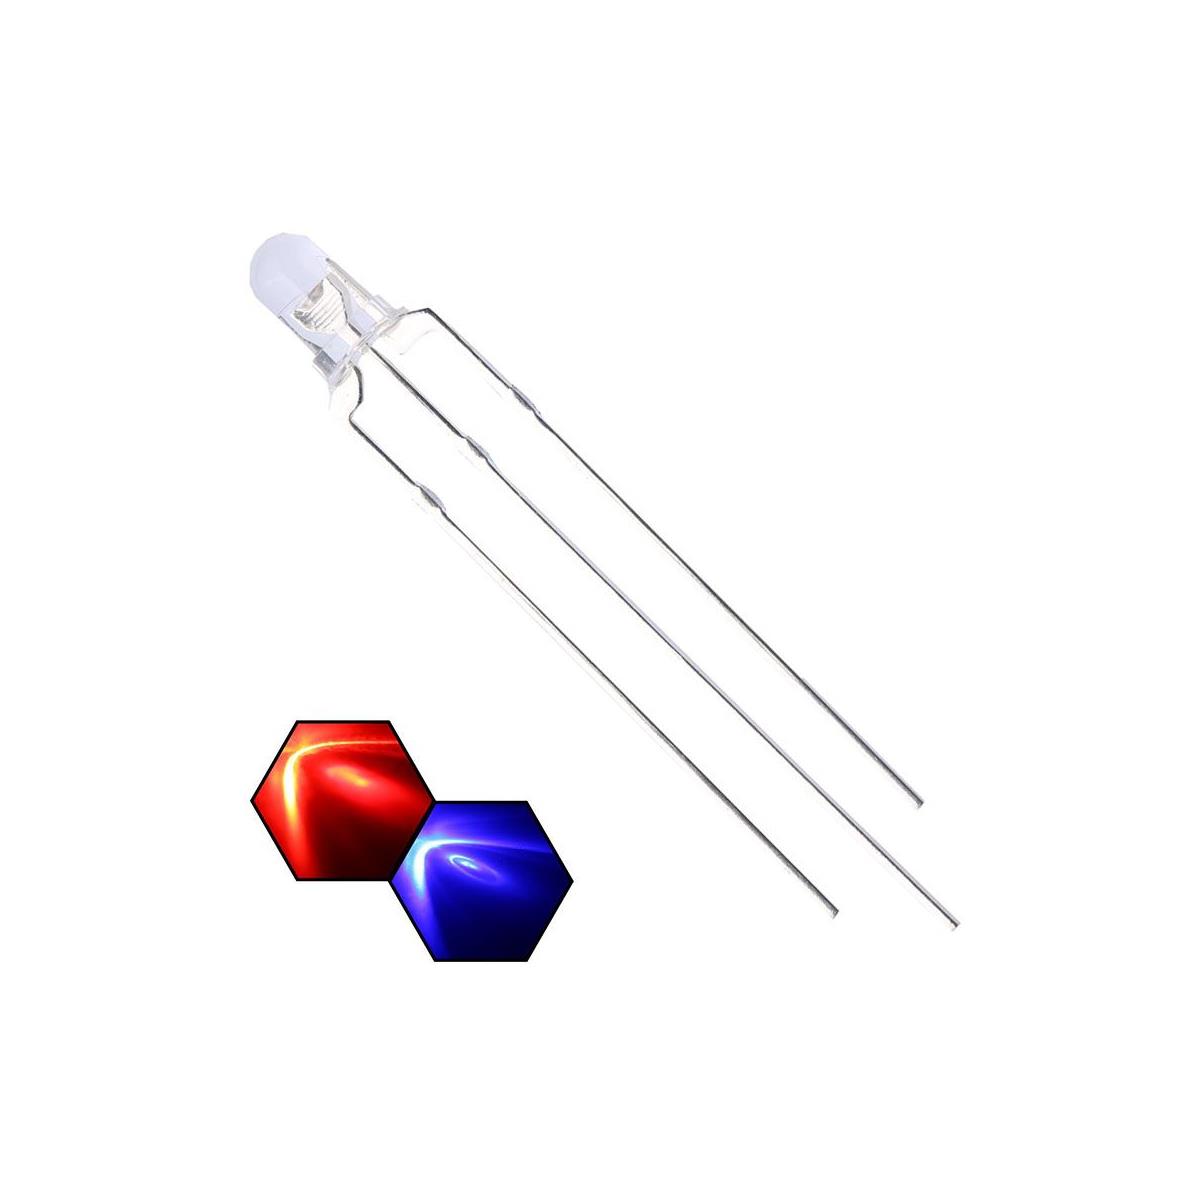 elc-02-090-1-2-colors-red-blue-3mm-common-cathode